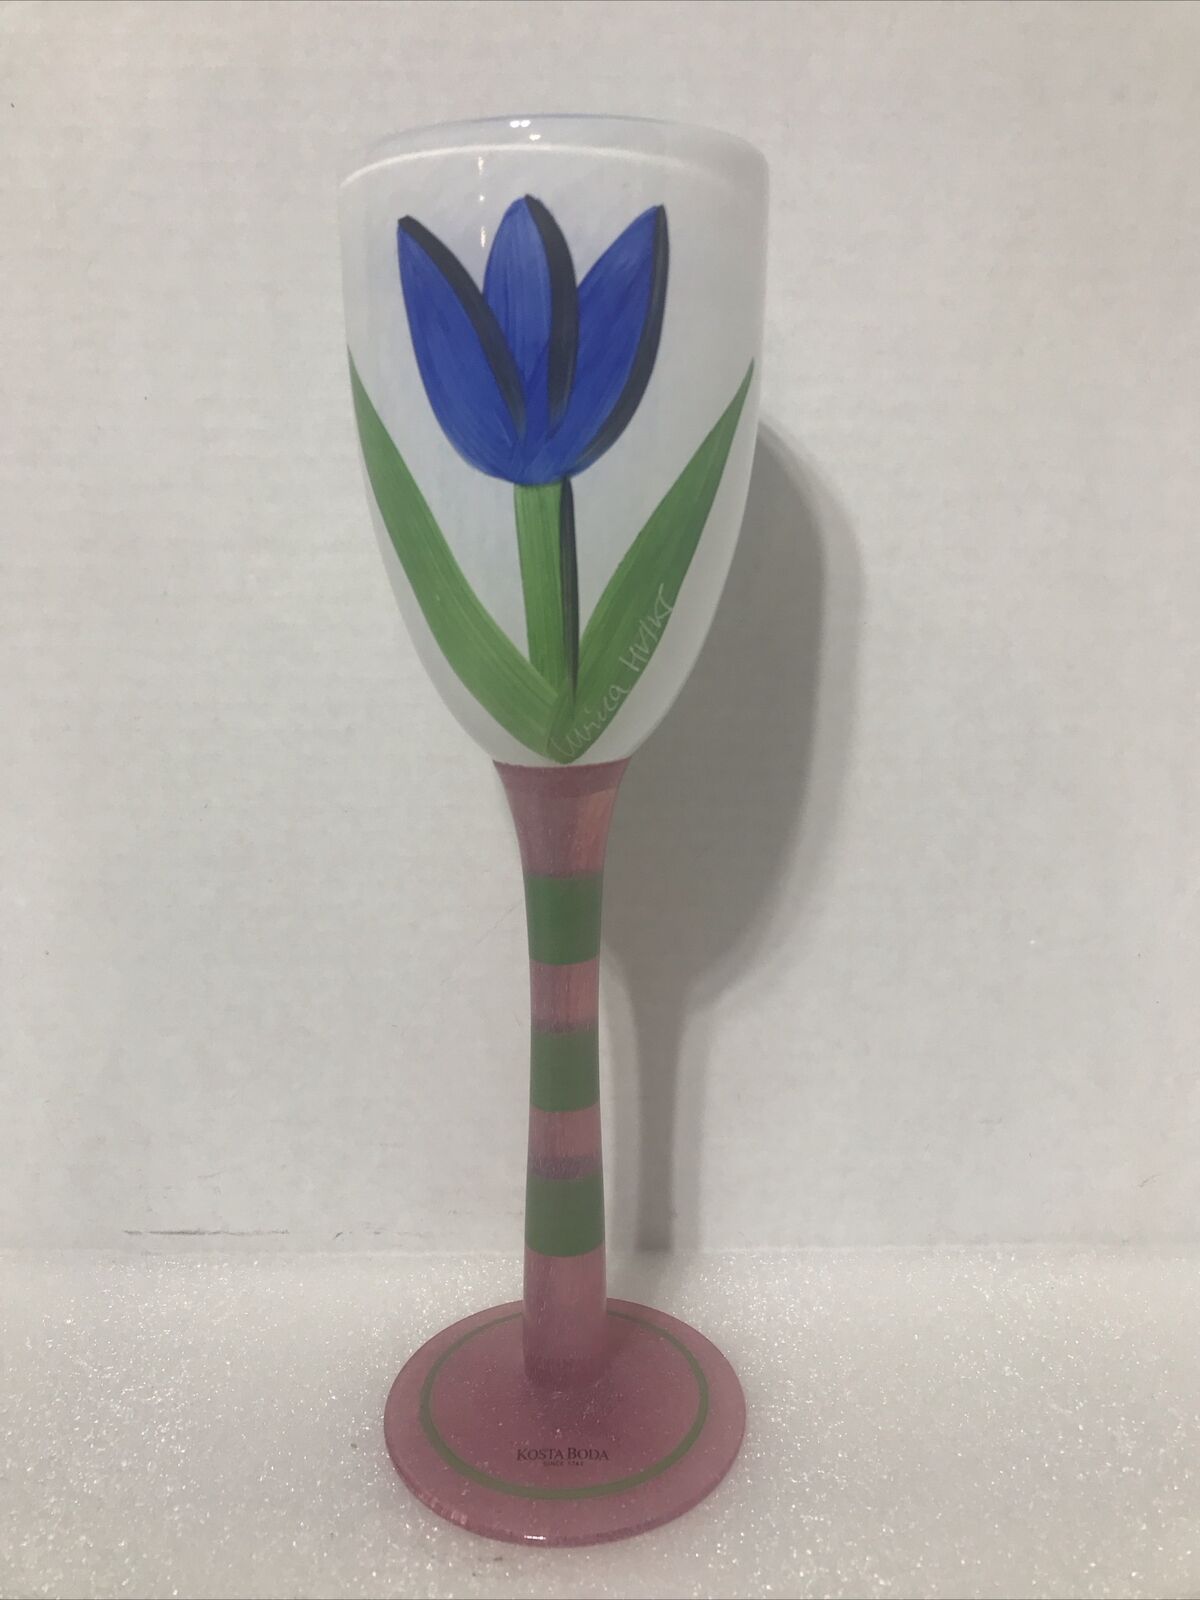 Kosta Boda Tulipa Ulrica Hydman Vallien White Wine Water Goblet Stem Glass 10” A